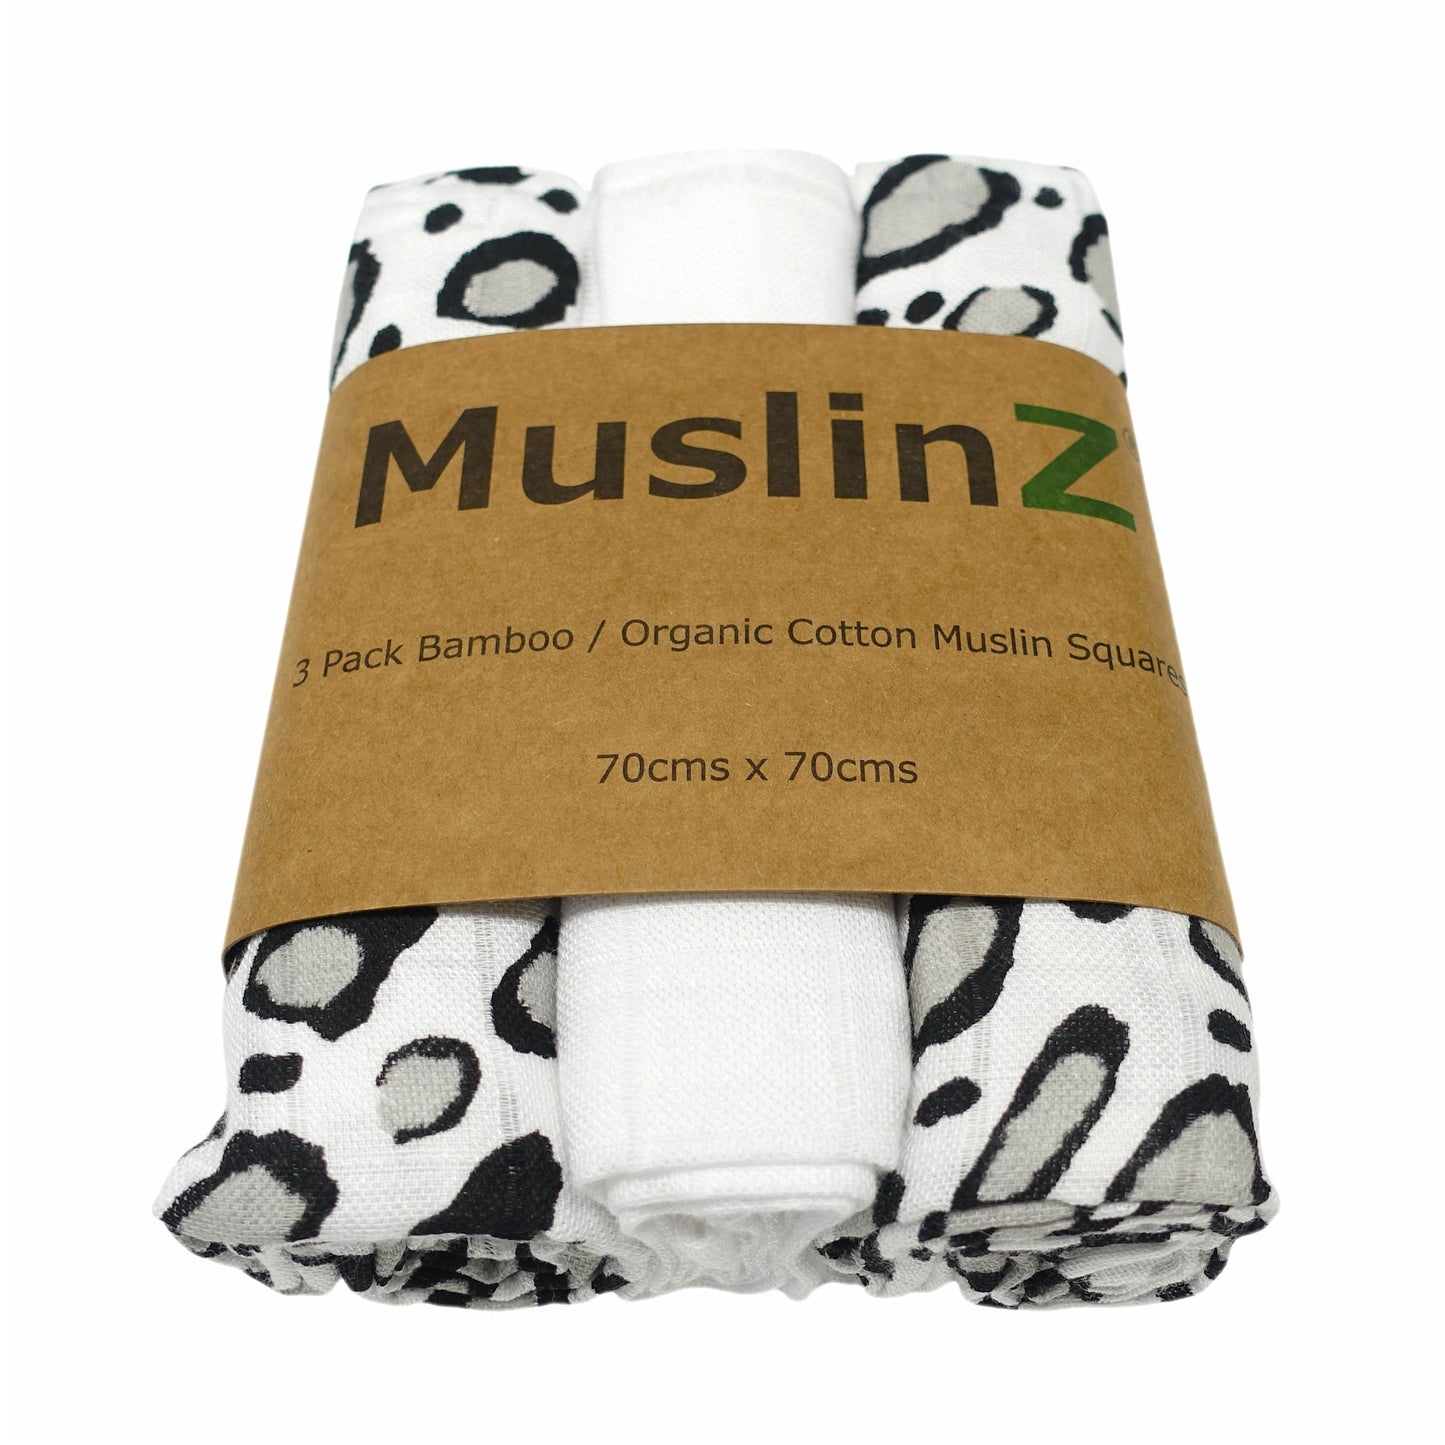 MuslinZ Bamboo/Organic Cotton Muslin Square Leopard